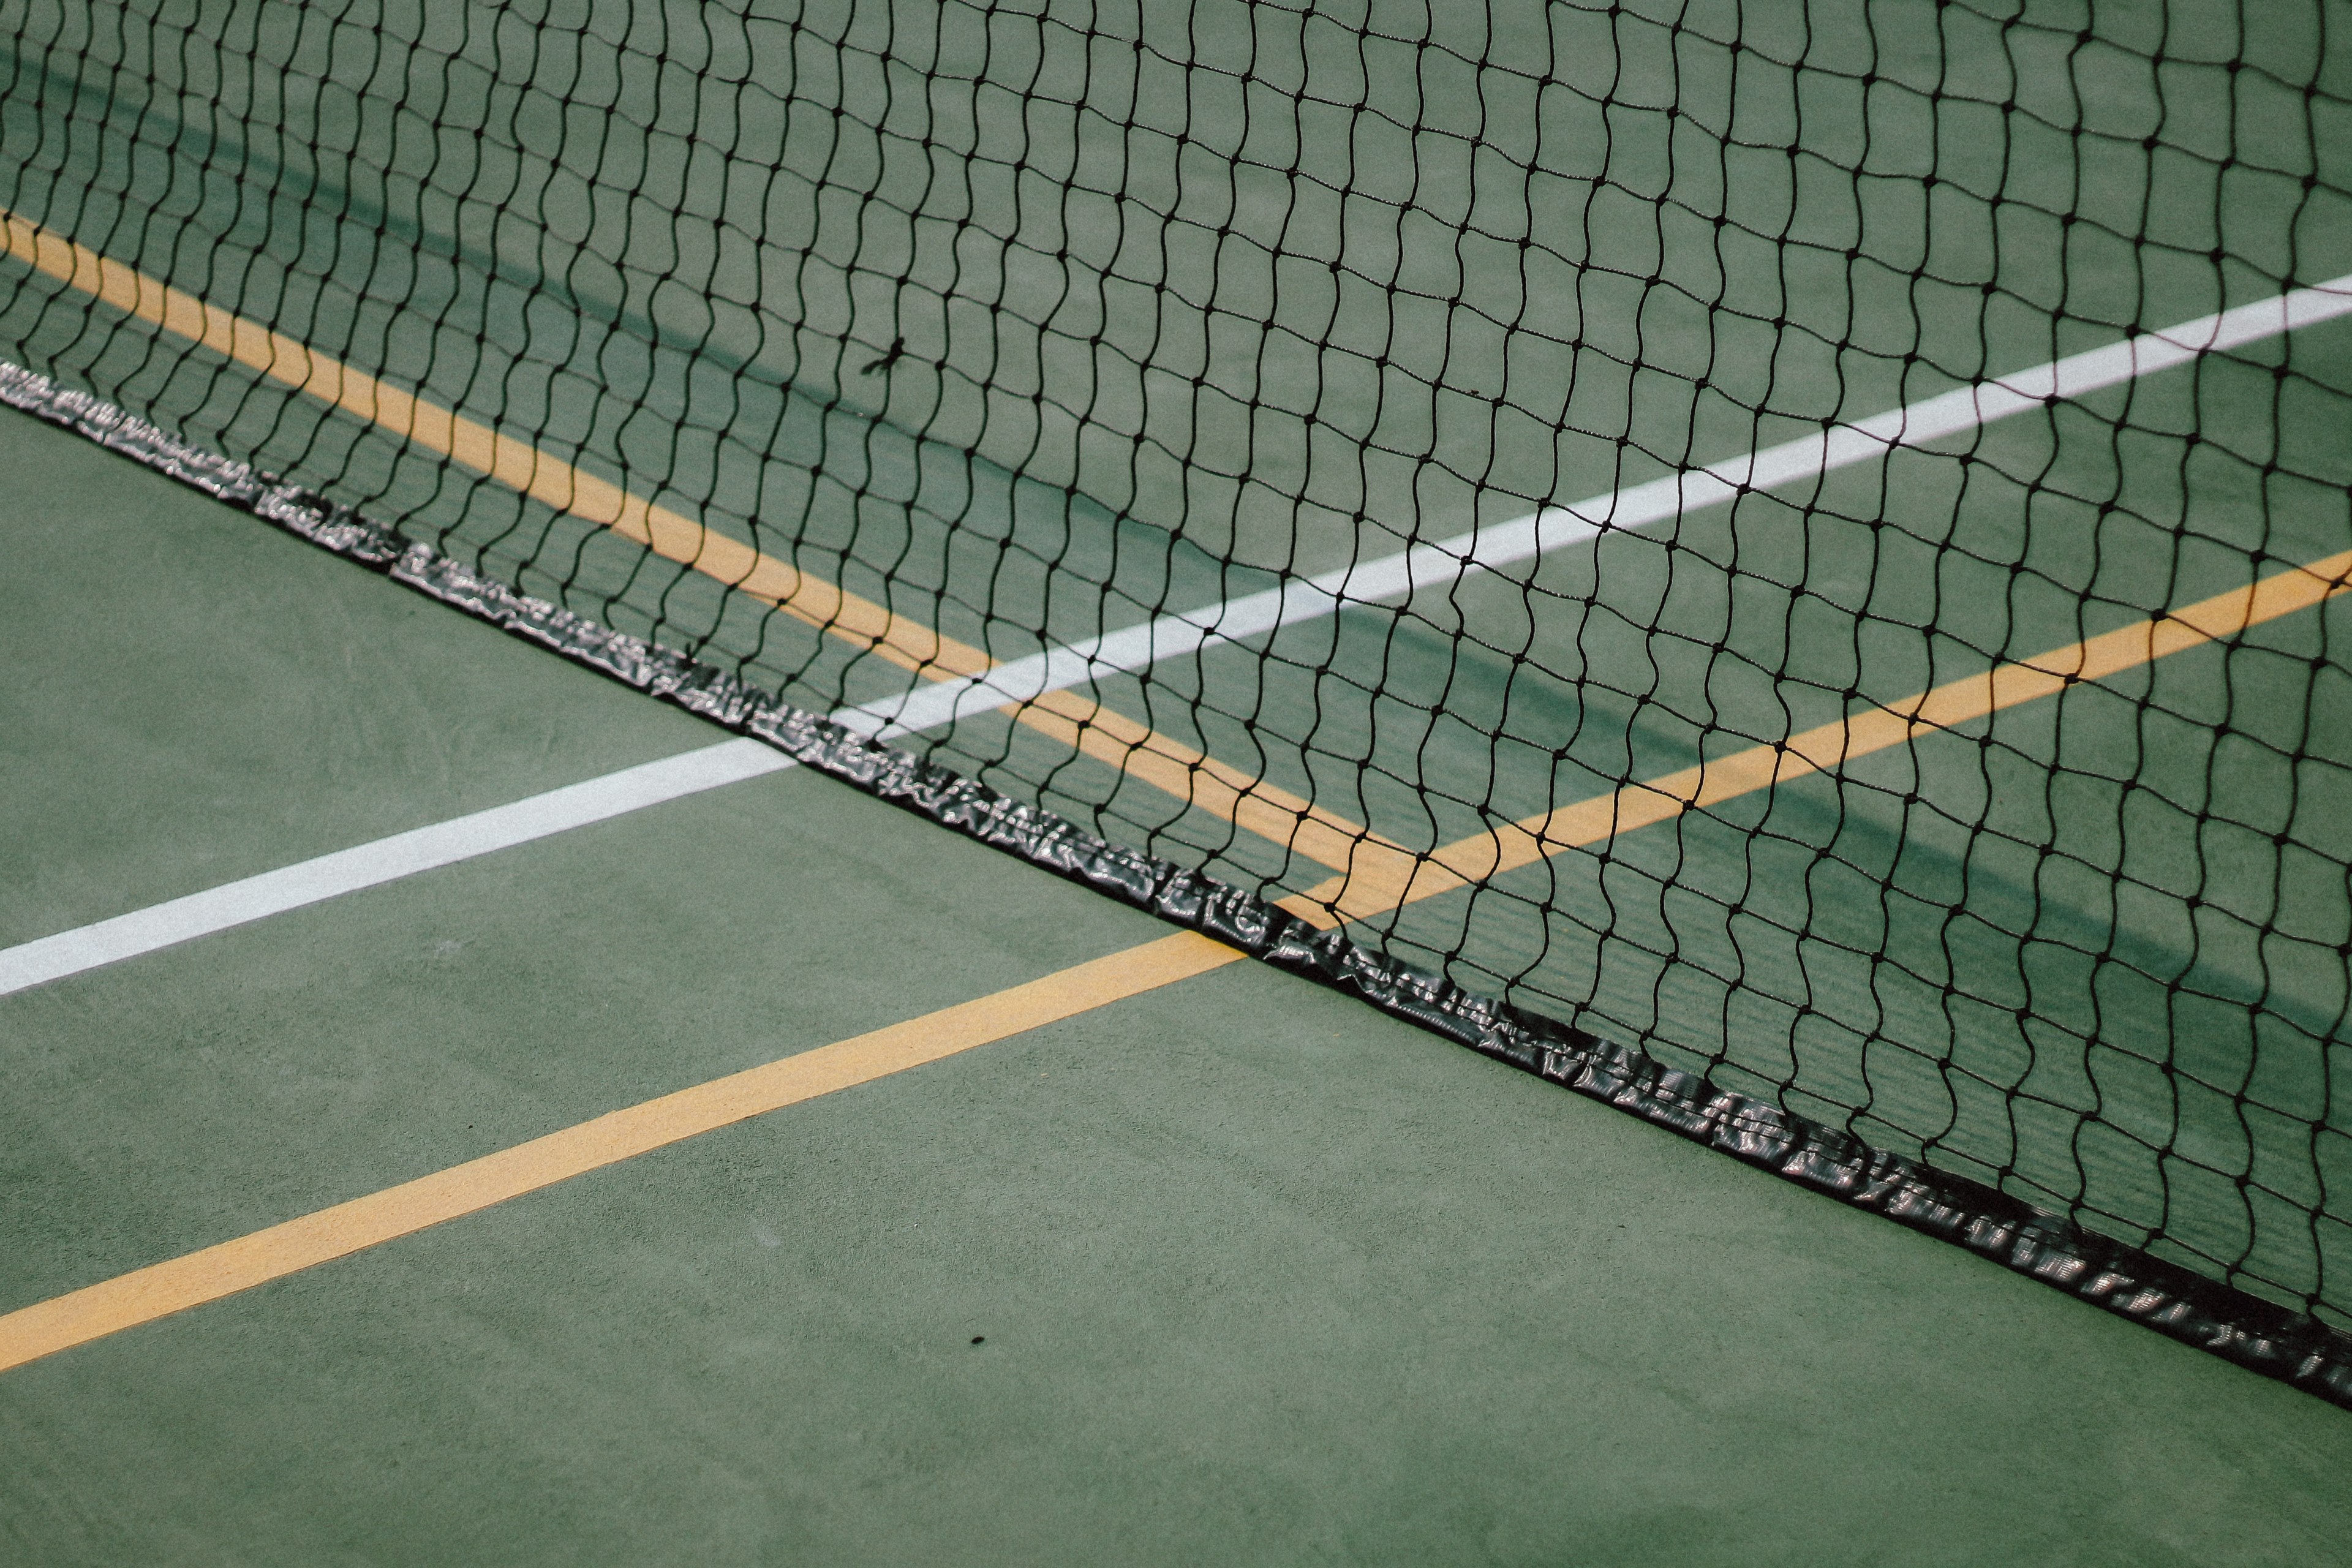 Wallpaper / sport tennis net tennis court and lines HD 4k wallpaper free download